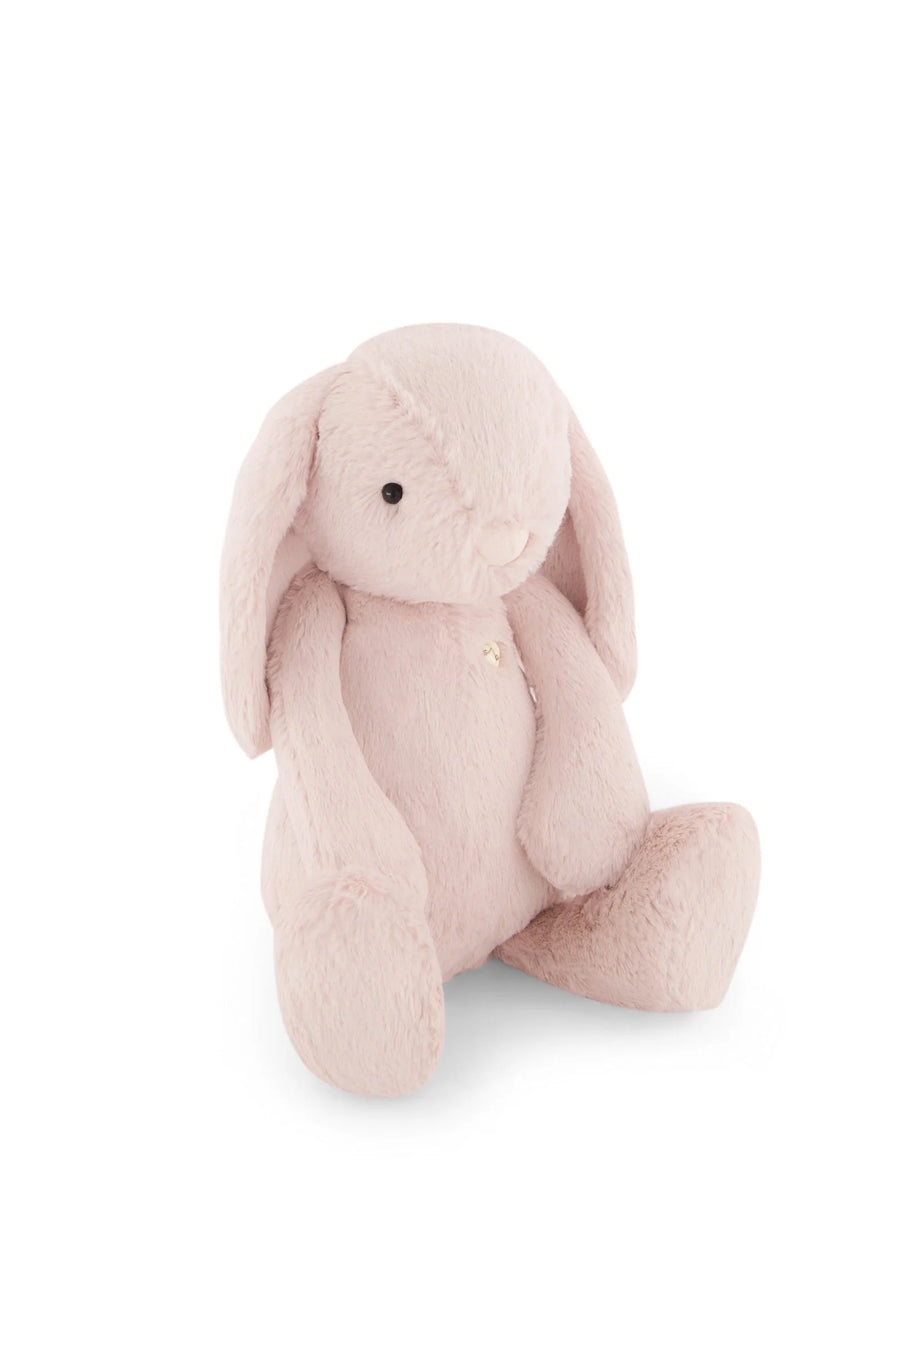 Snuggle Bunny - Penelope - Blush - 20cm